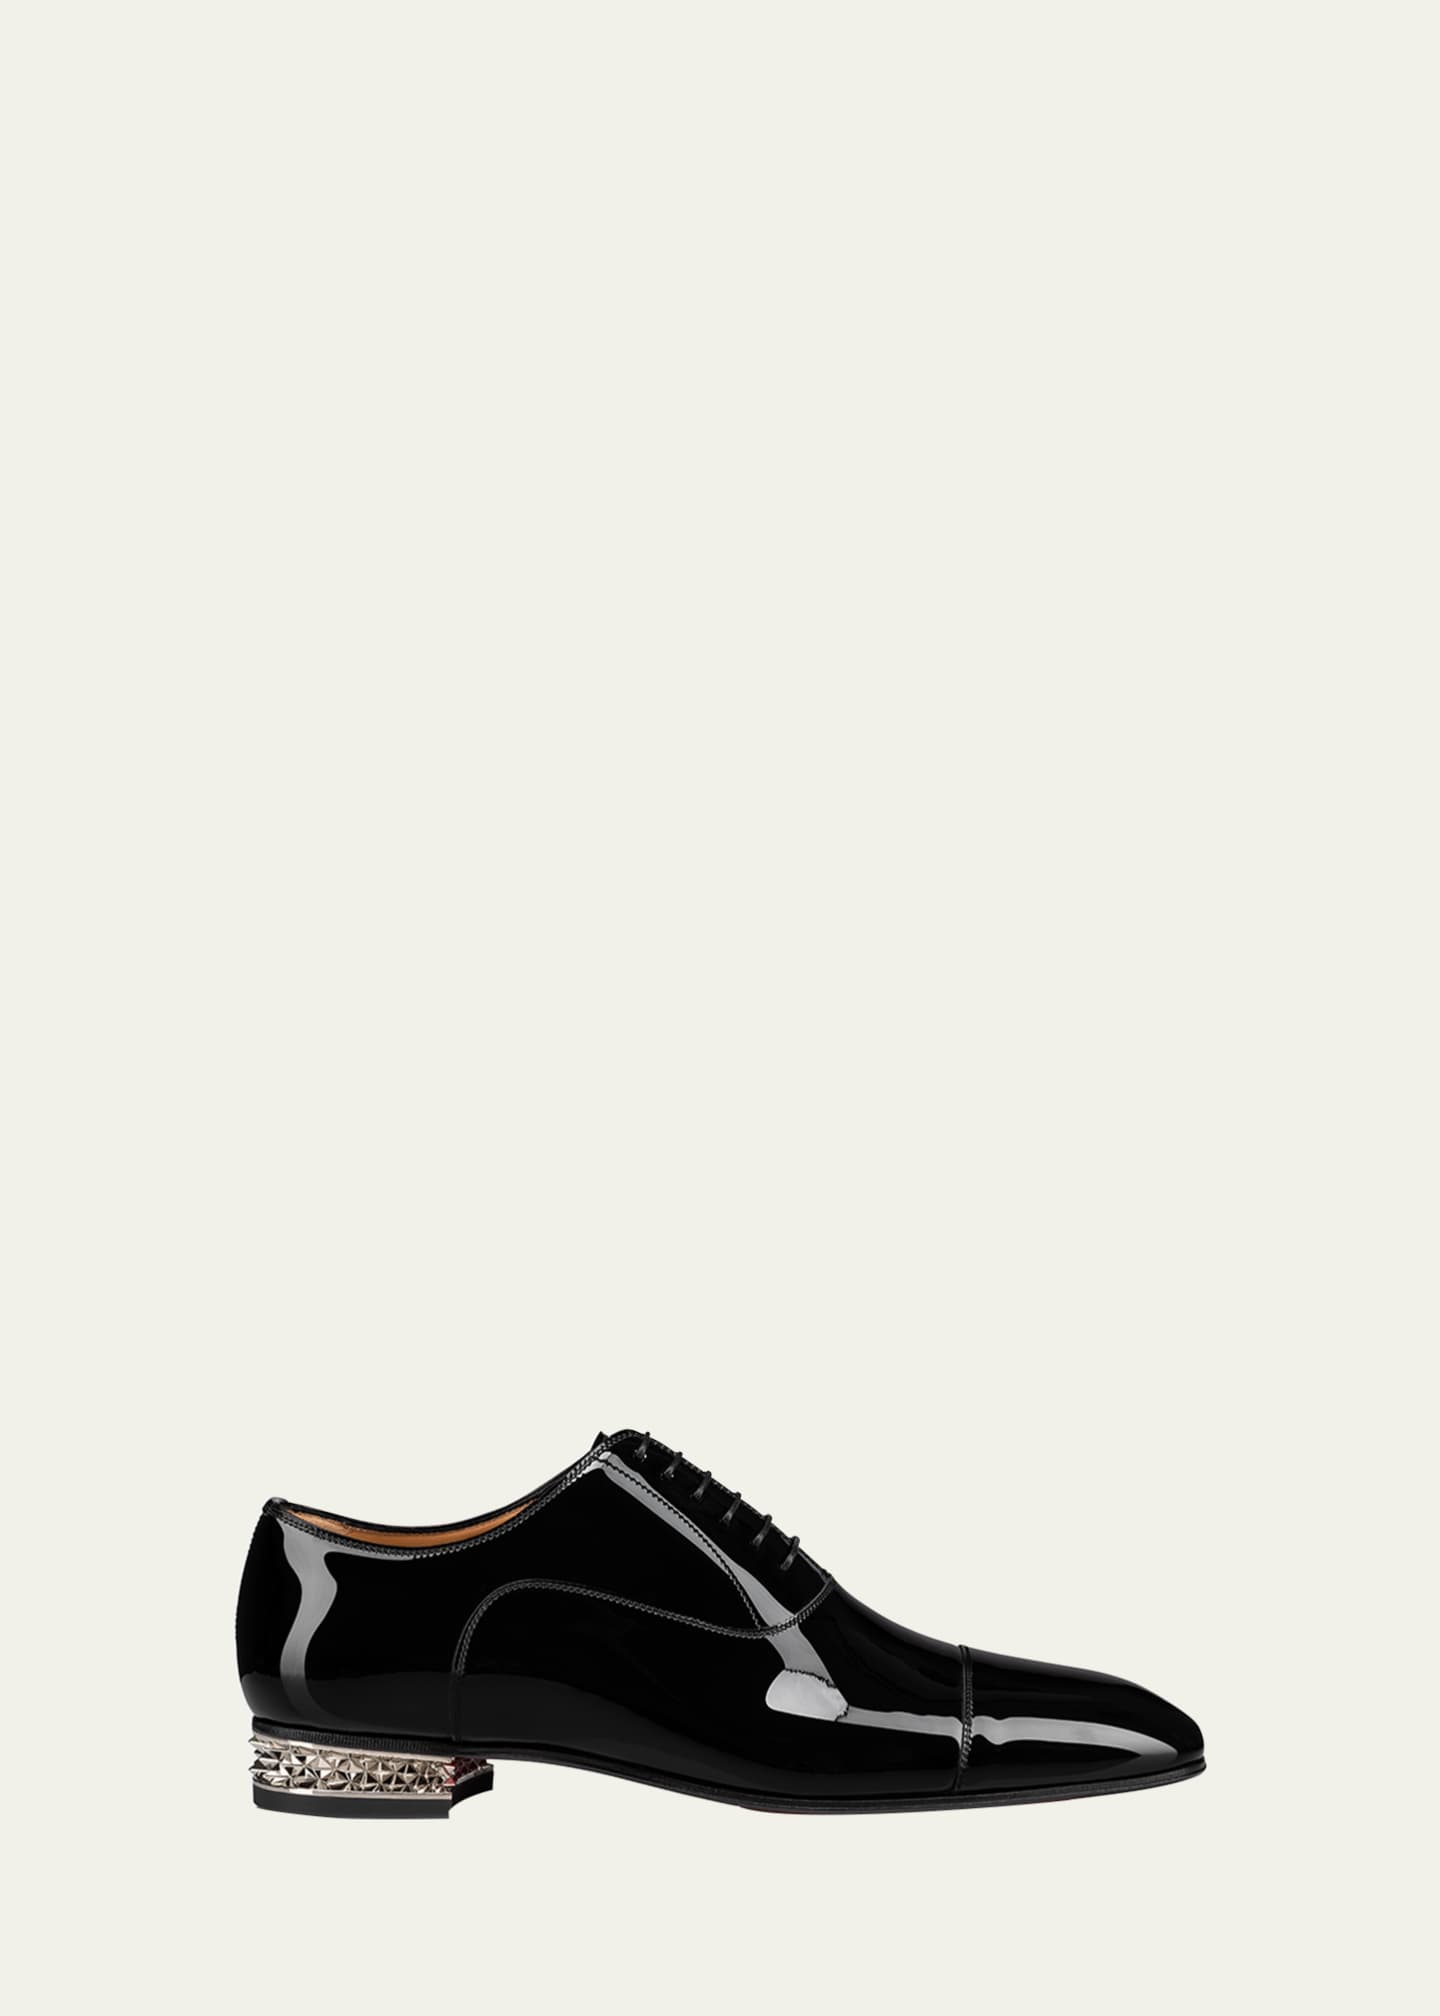 Christian Louboutin Men's Flat Leather Oxfords - Goodman